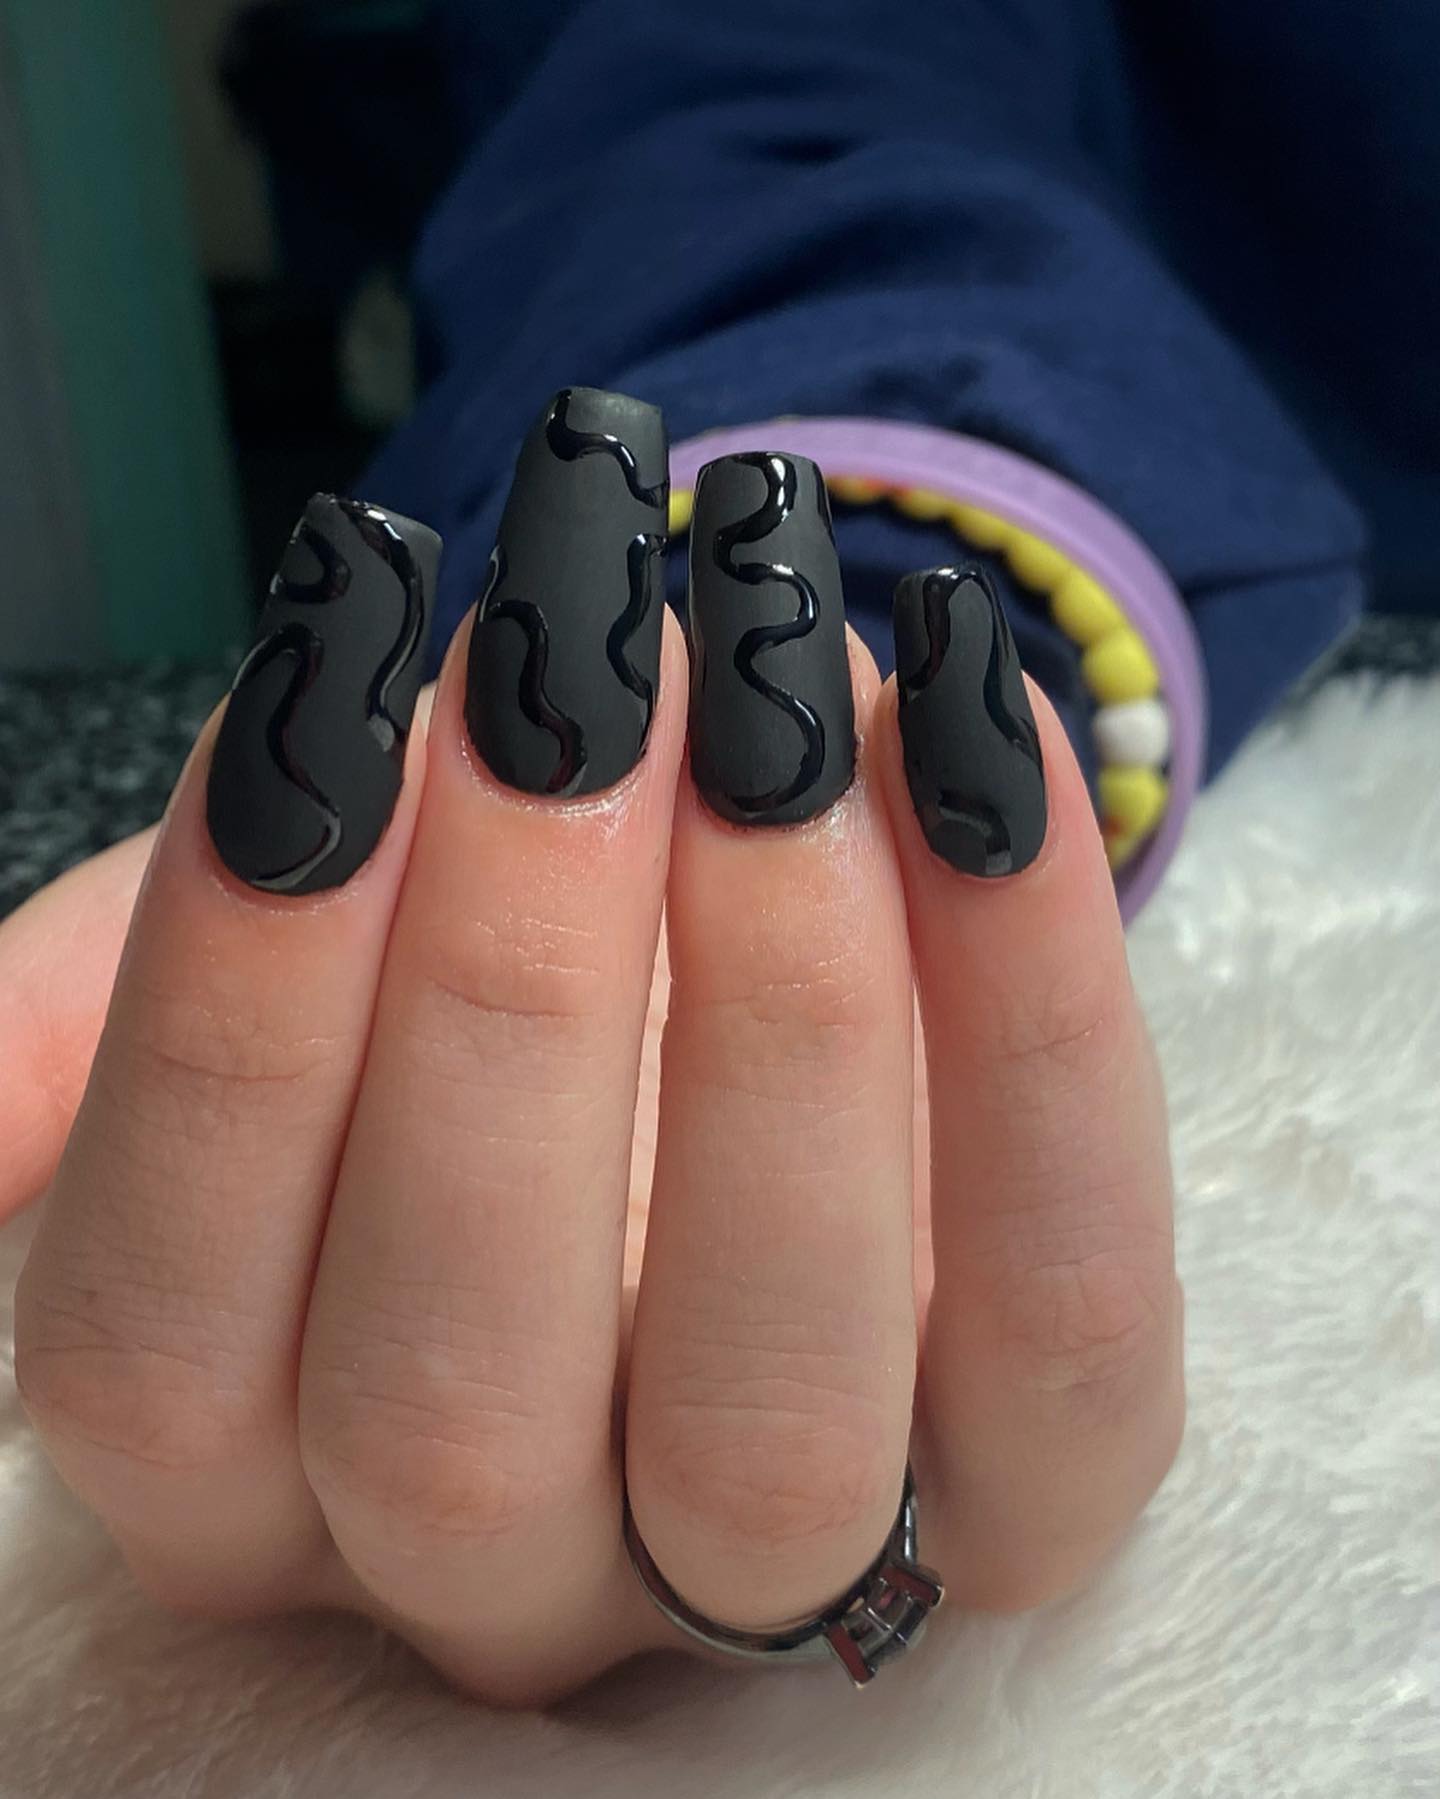 black coffin nails